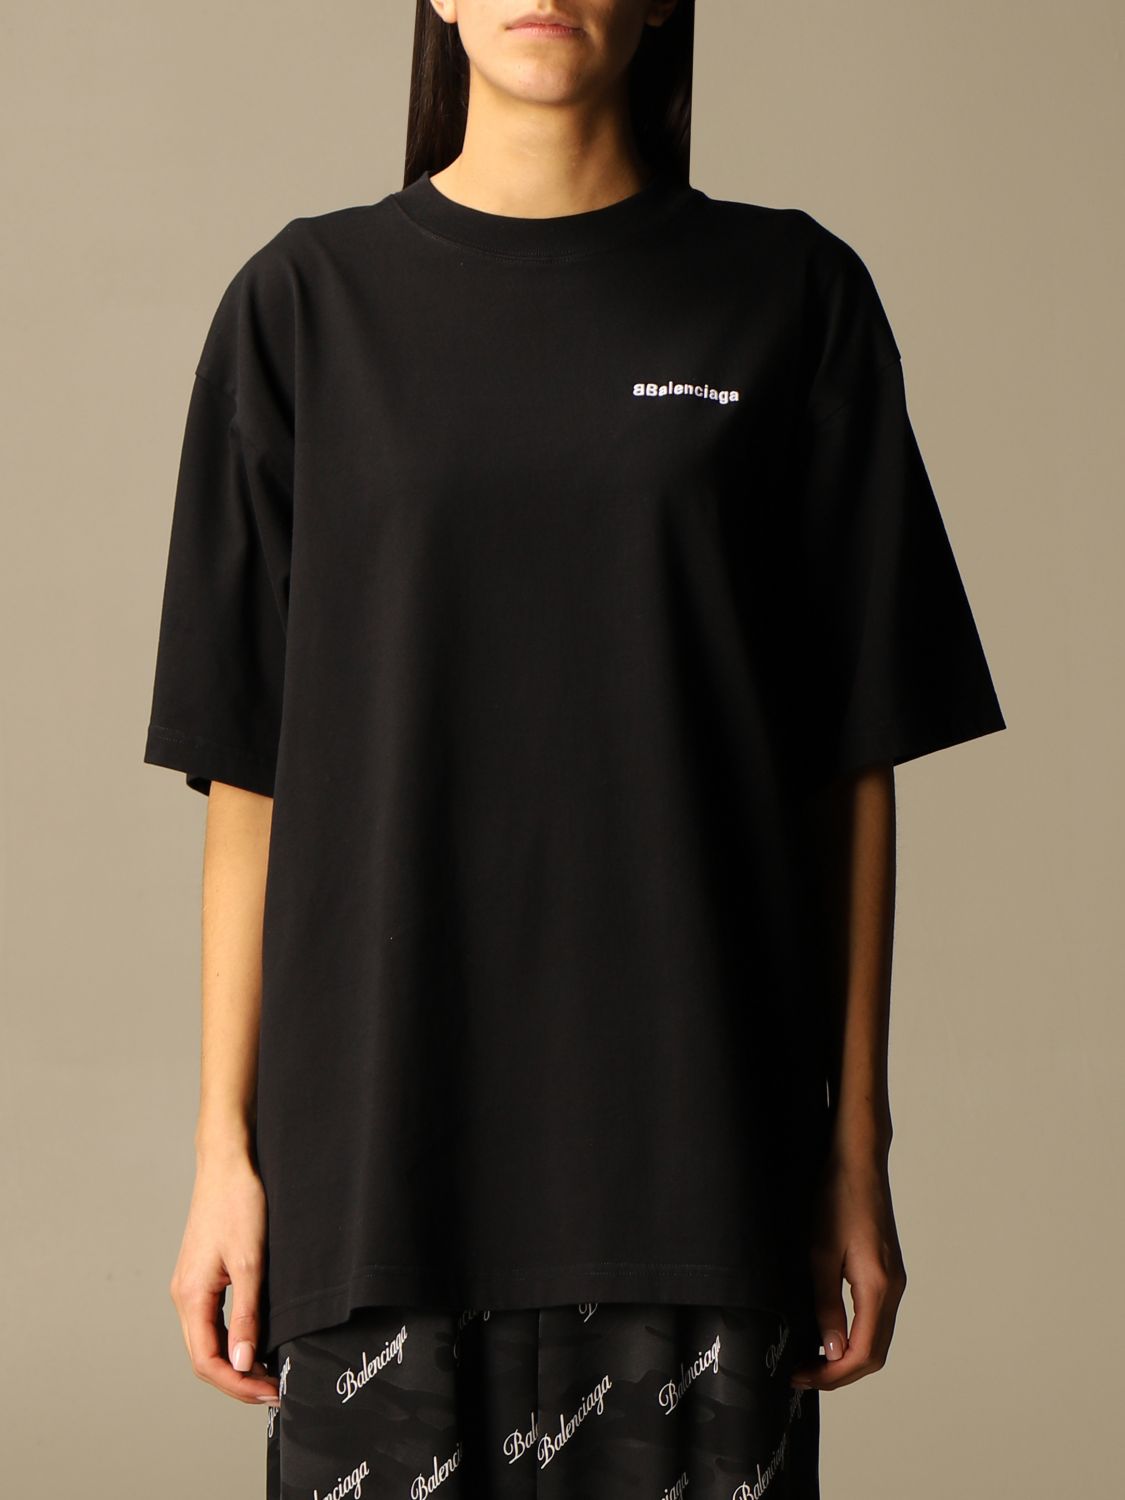 BALENCIAGA: over t-shirt with mini B logo - Black | Balenciaga t-shirt ...